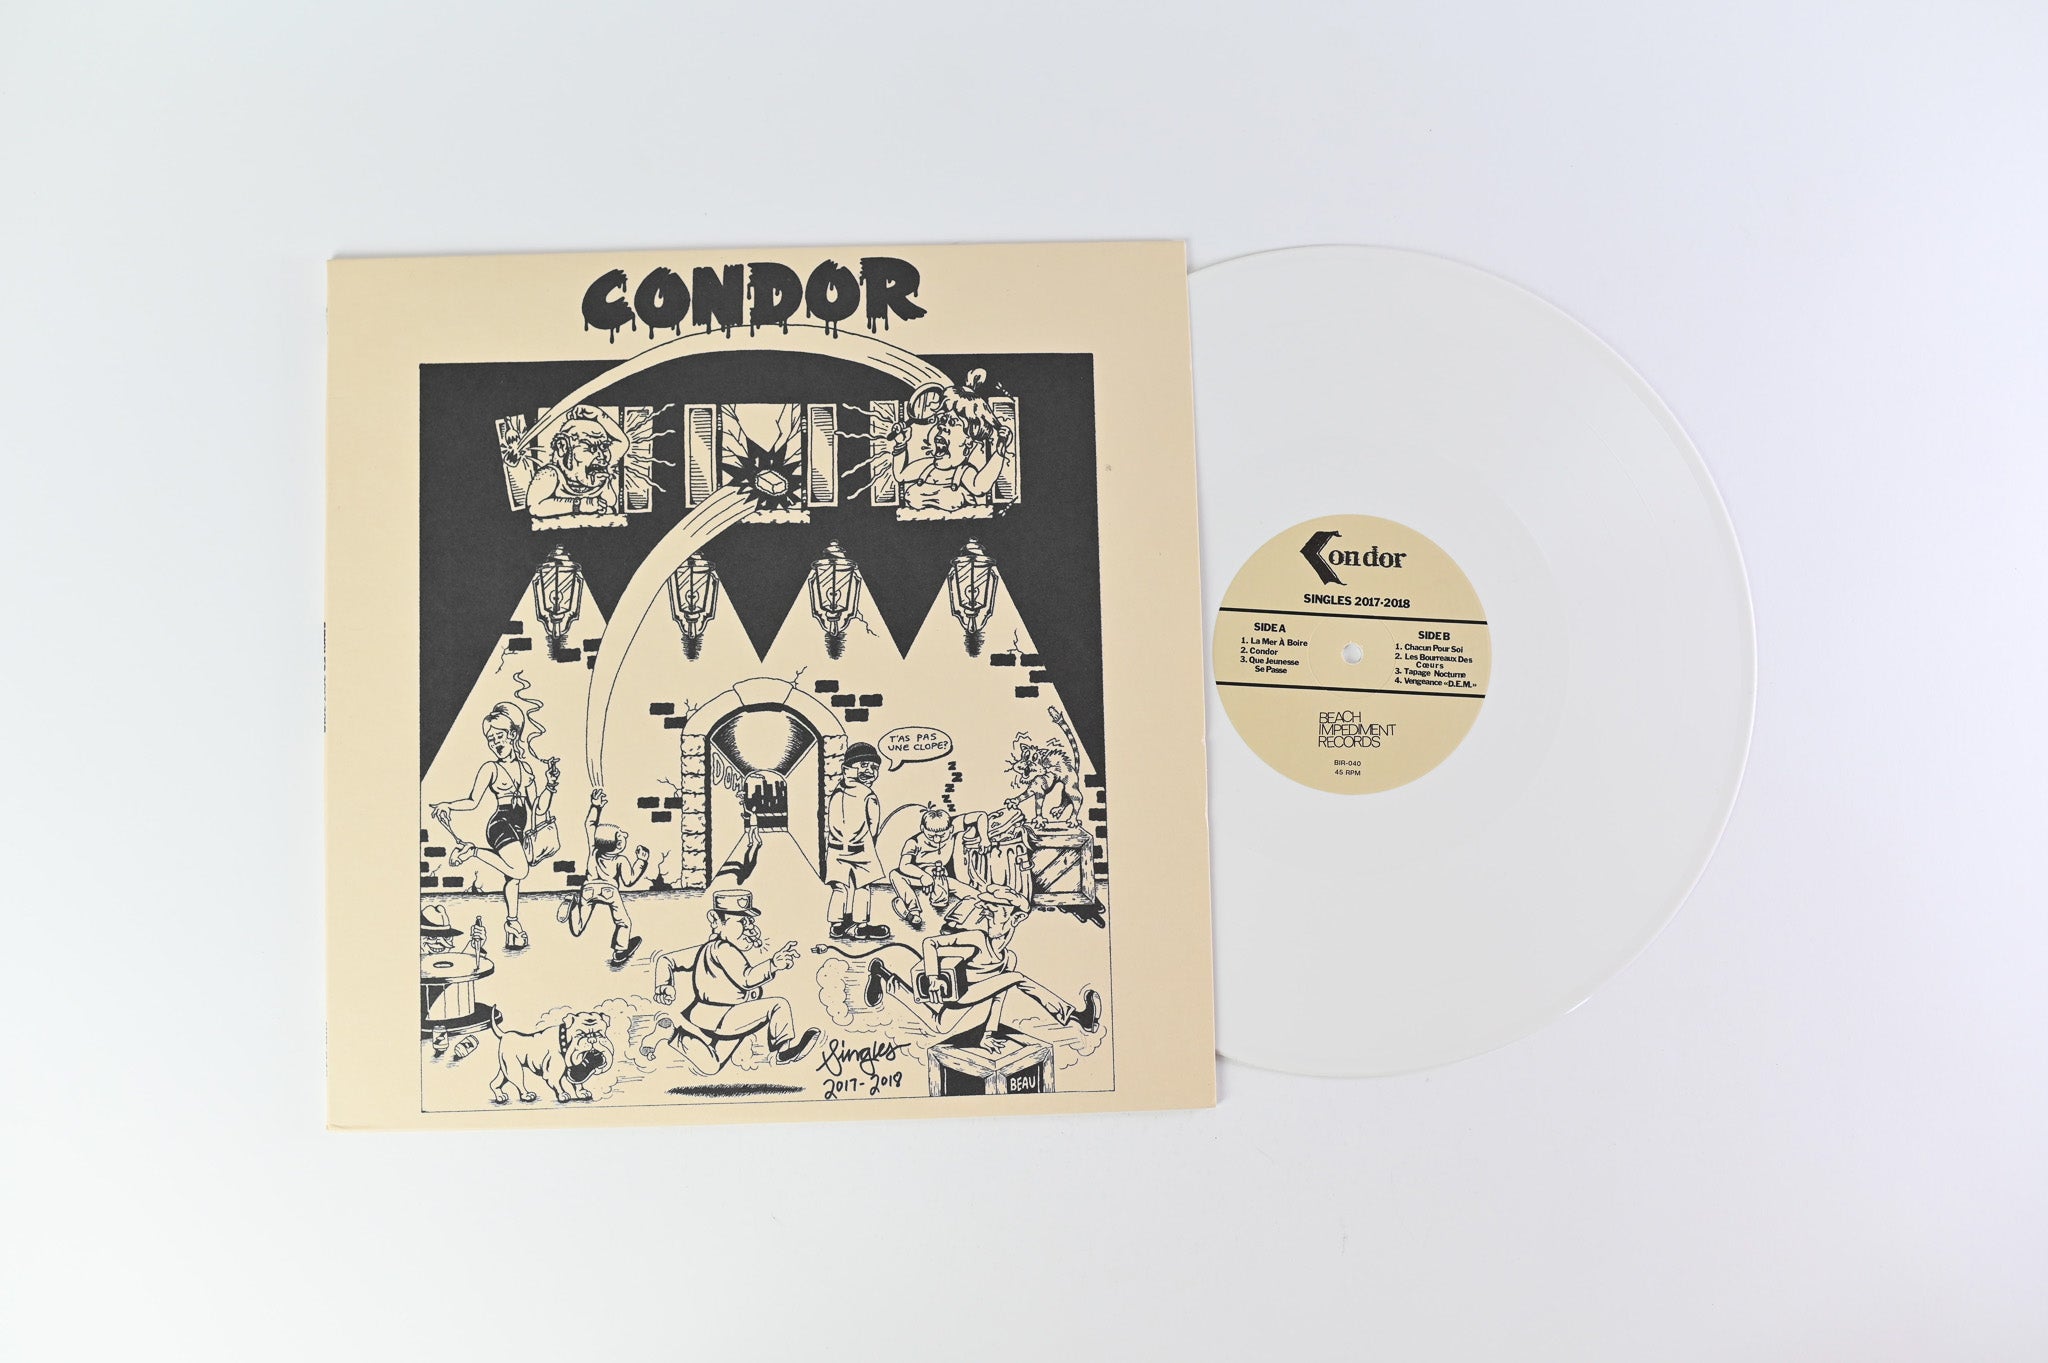 Condor - Singles 2017-2018 on Beach Impediment Records - Cream Vinyl